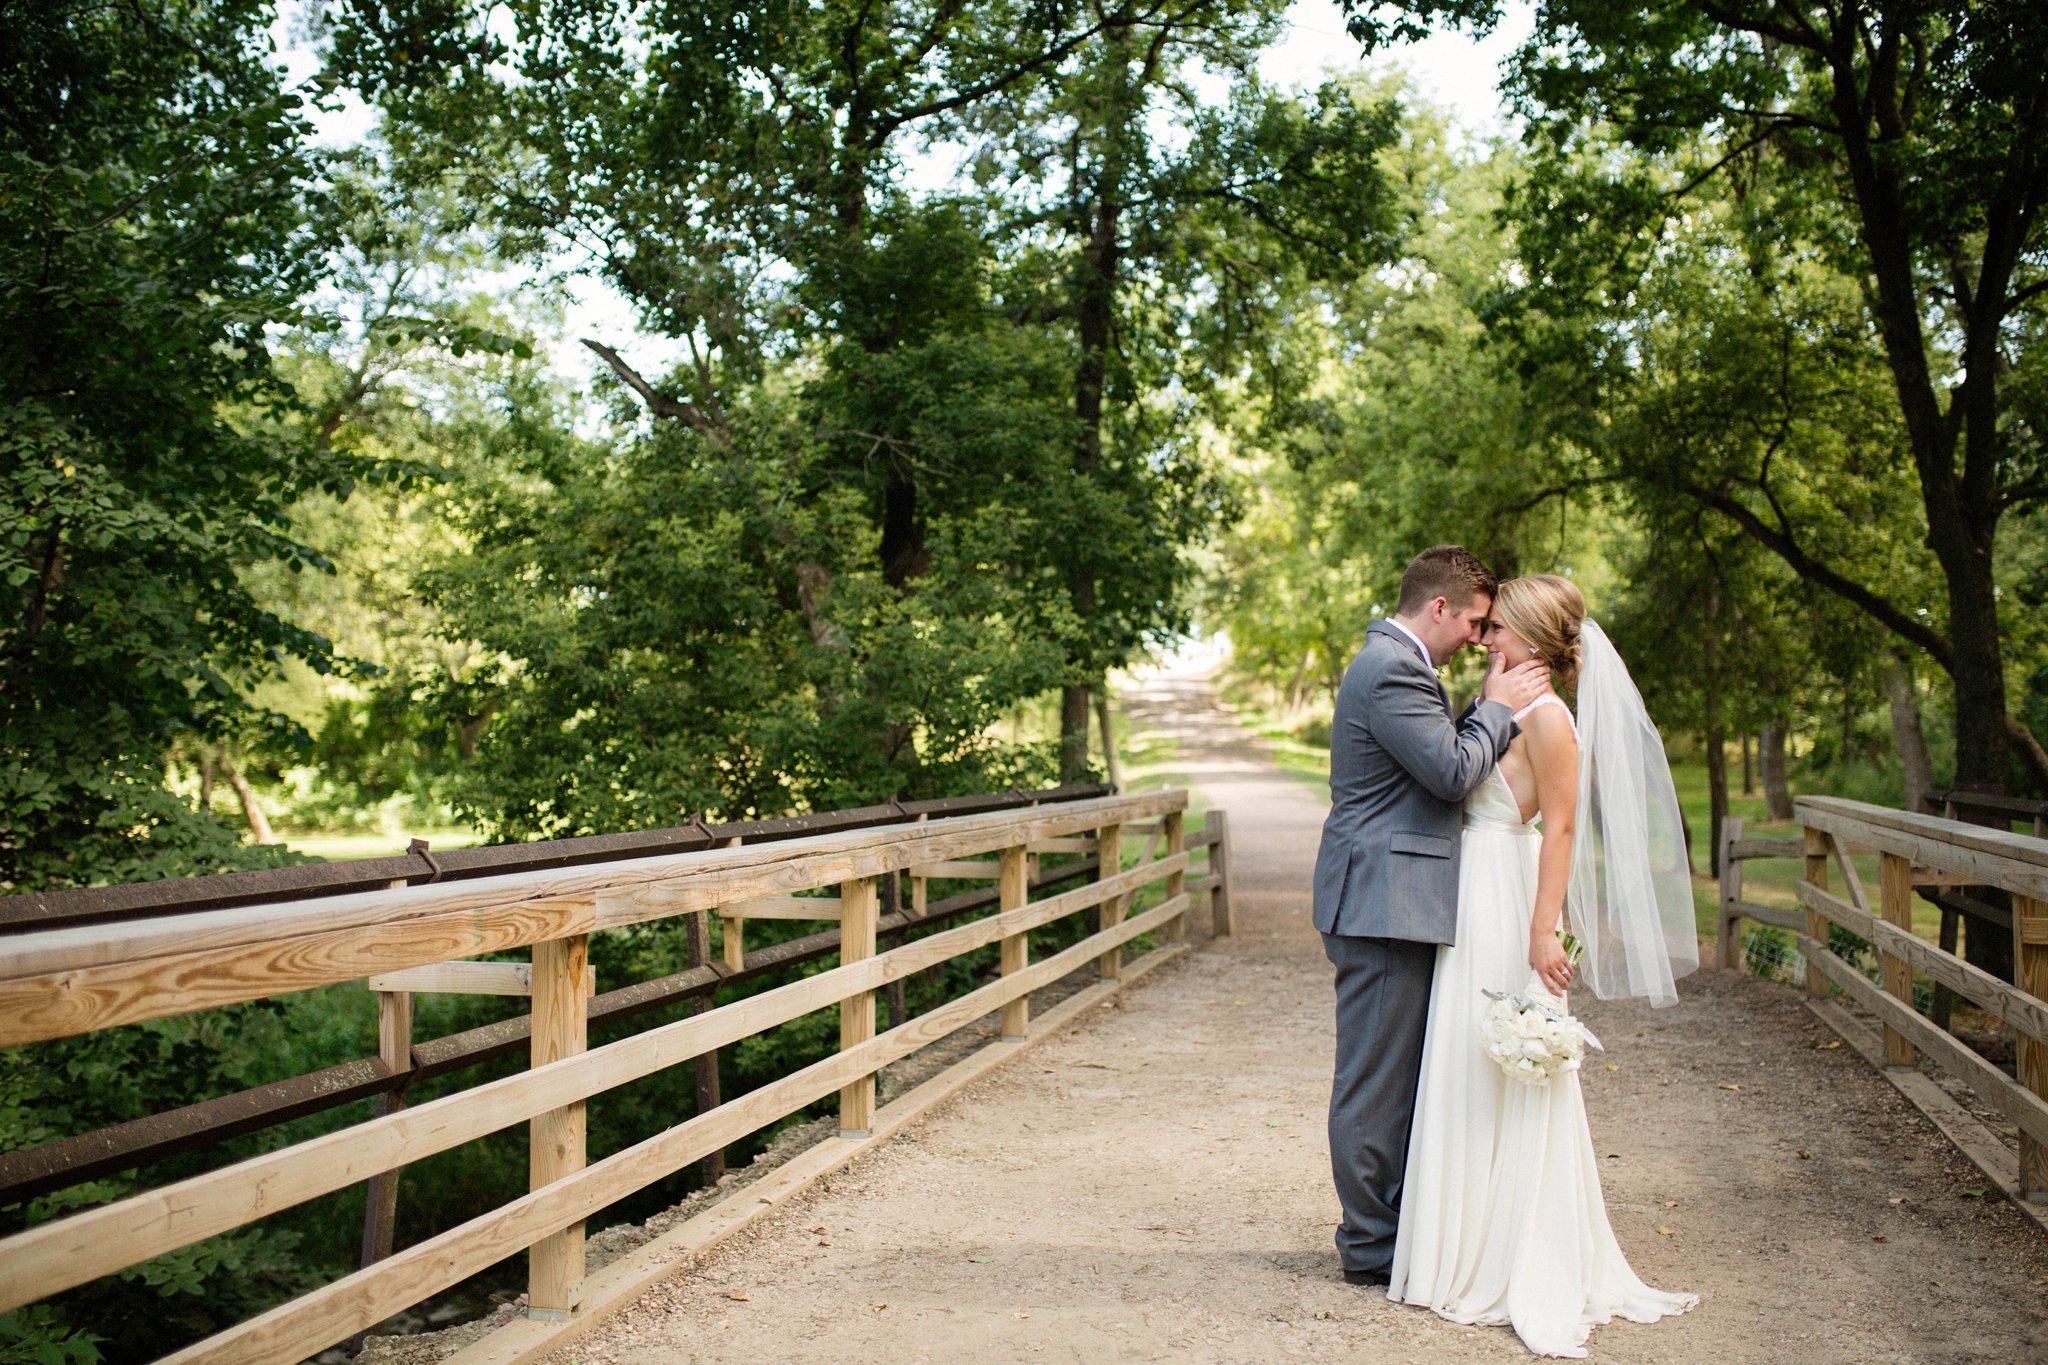 Sioux Falls Wedding Photos | Destination Photographer | Felicia The Photographer | Mary Jo Wegner Arboretum | bride and groom pose | boho bridal style | posing | outdoor natural photos | Romantic